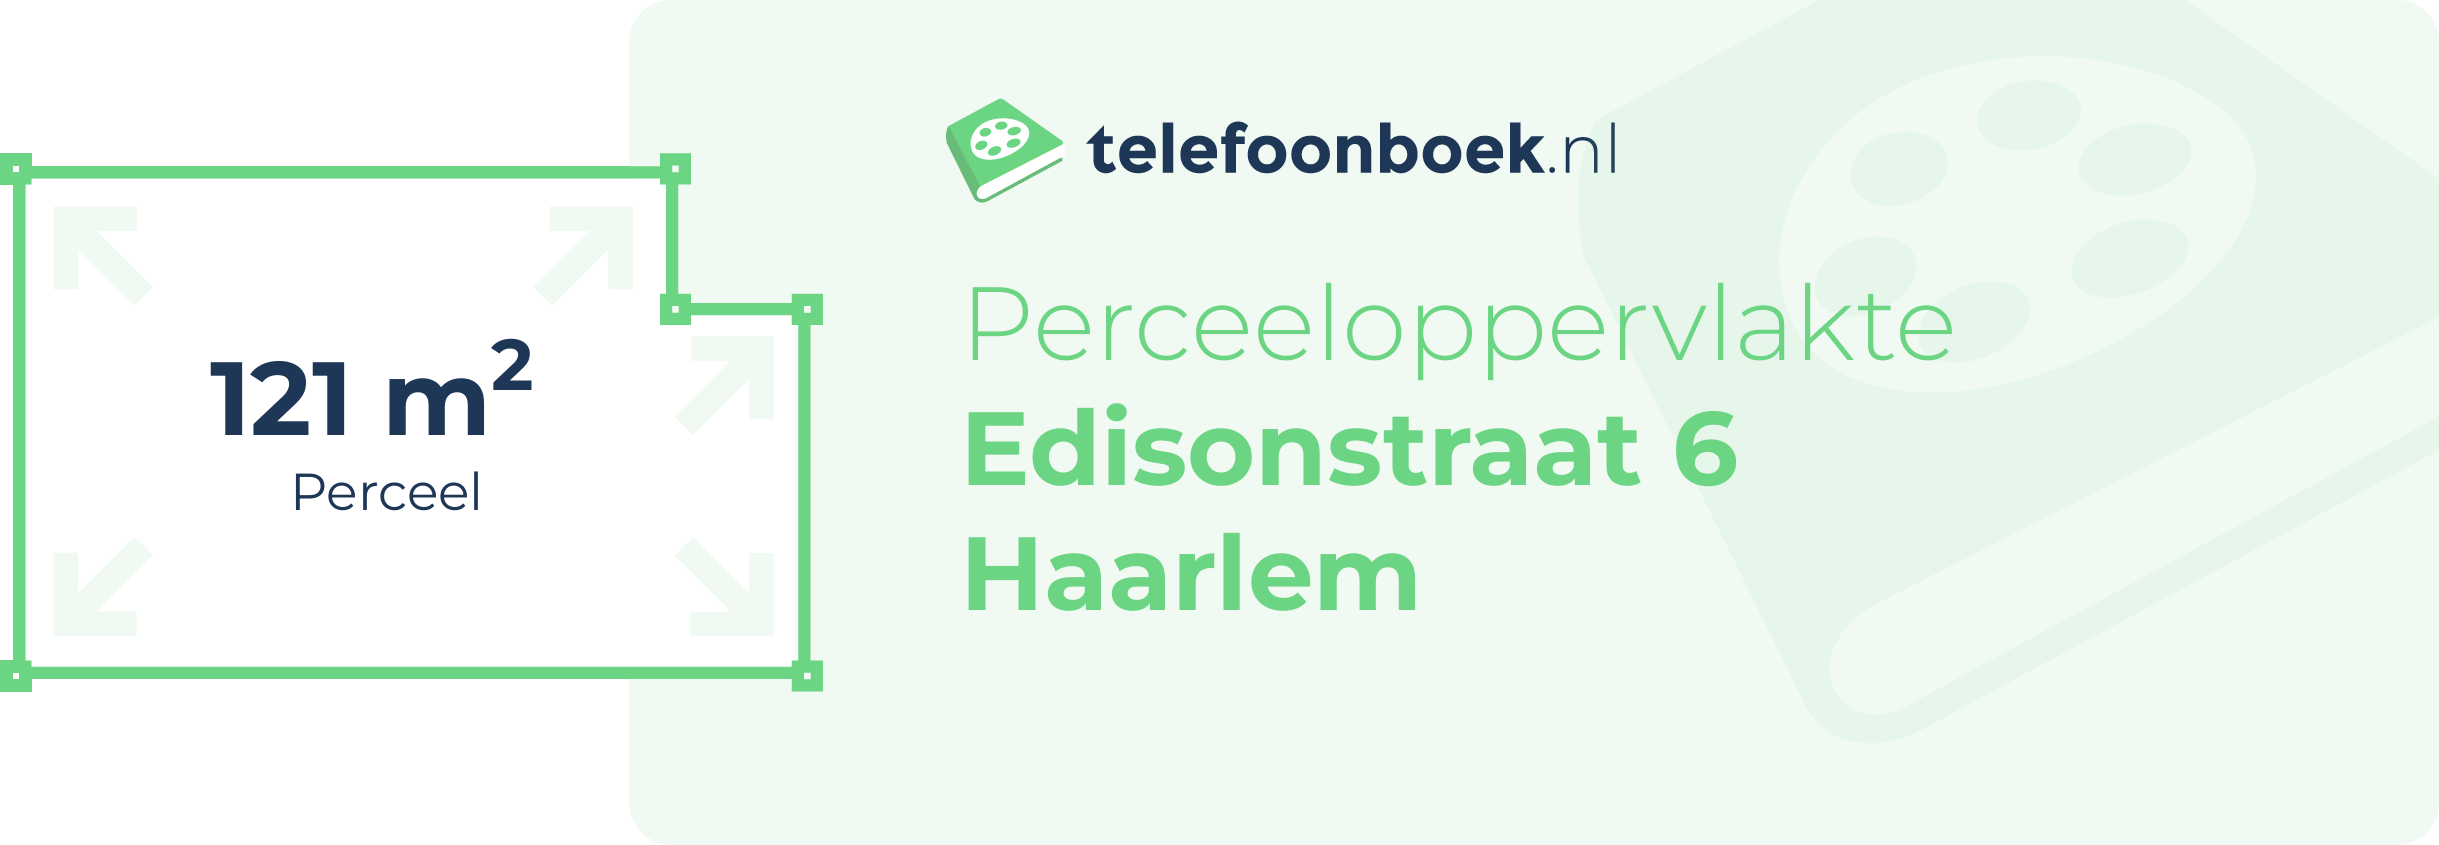 Perceeloppervlakte Edisonstraat 6 Haarlem